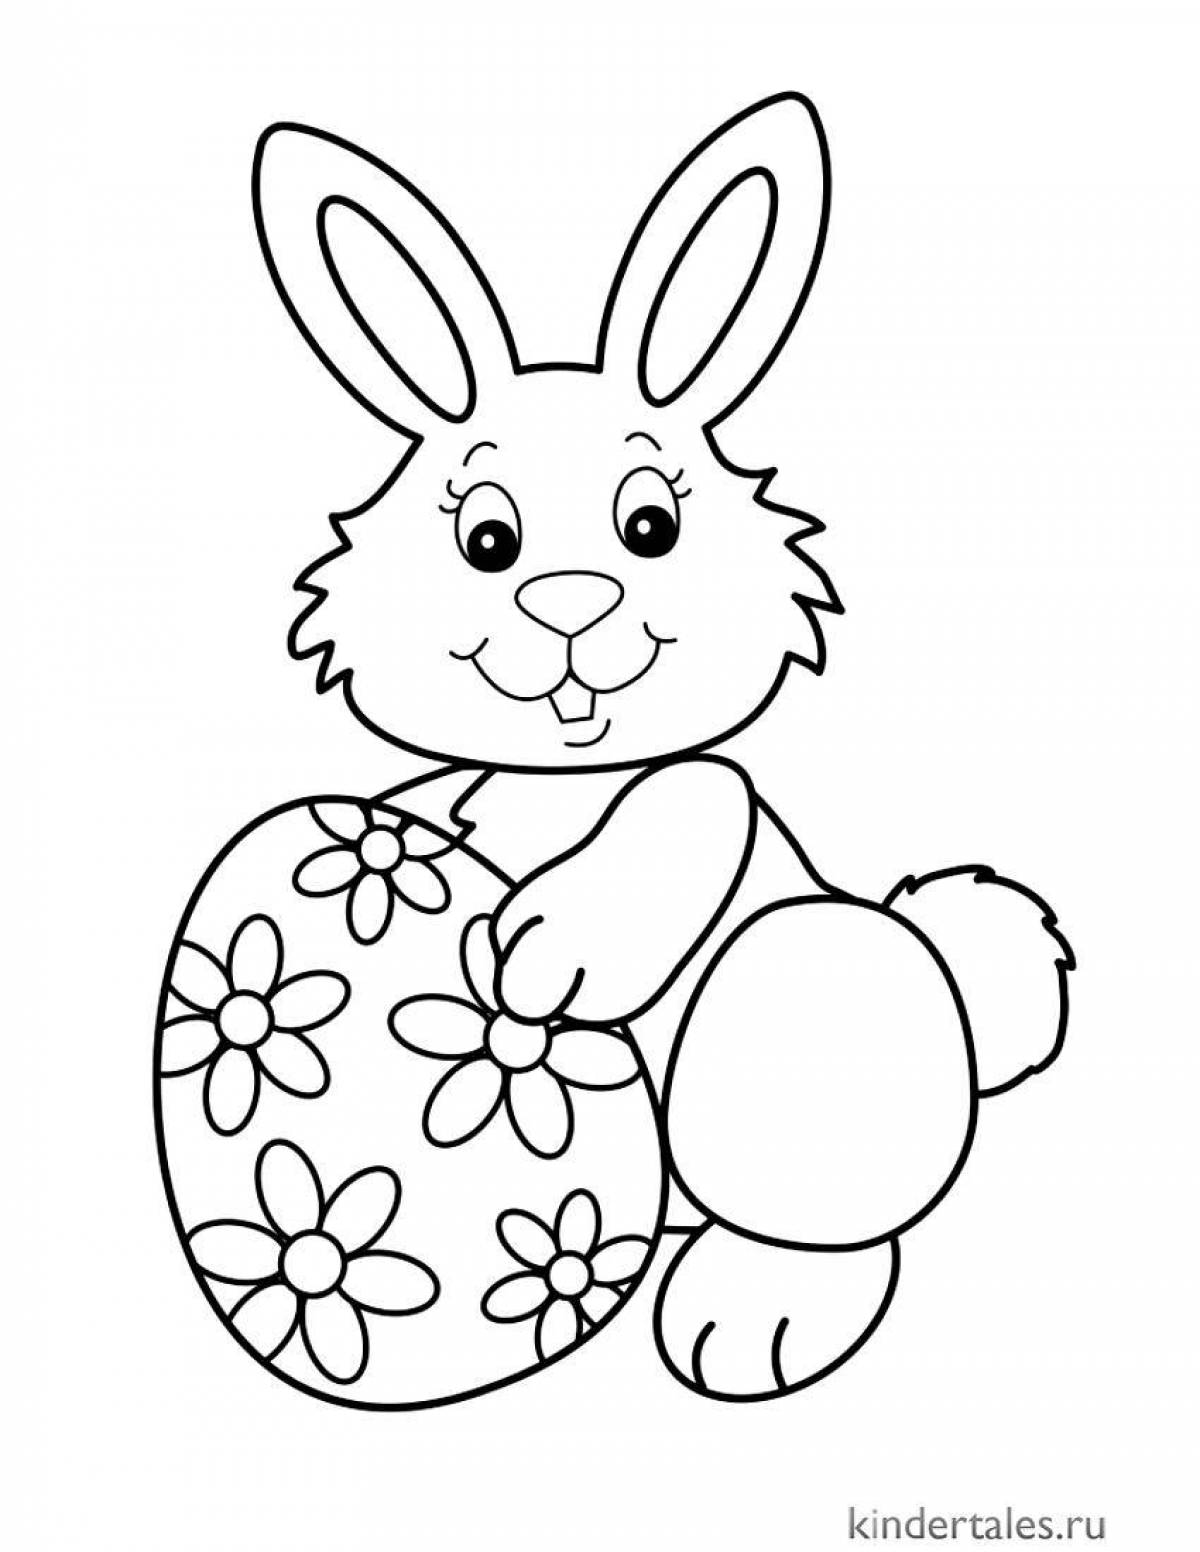 Fancy rabbit coloring